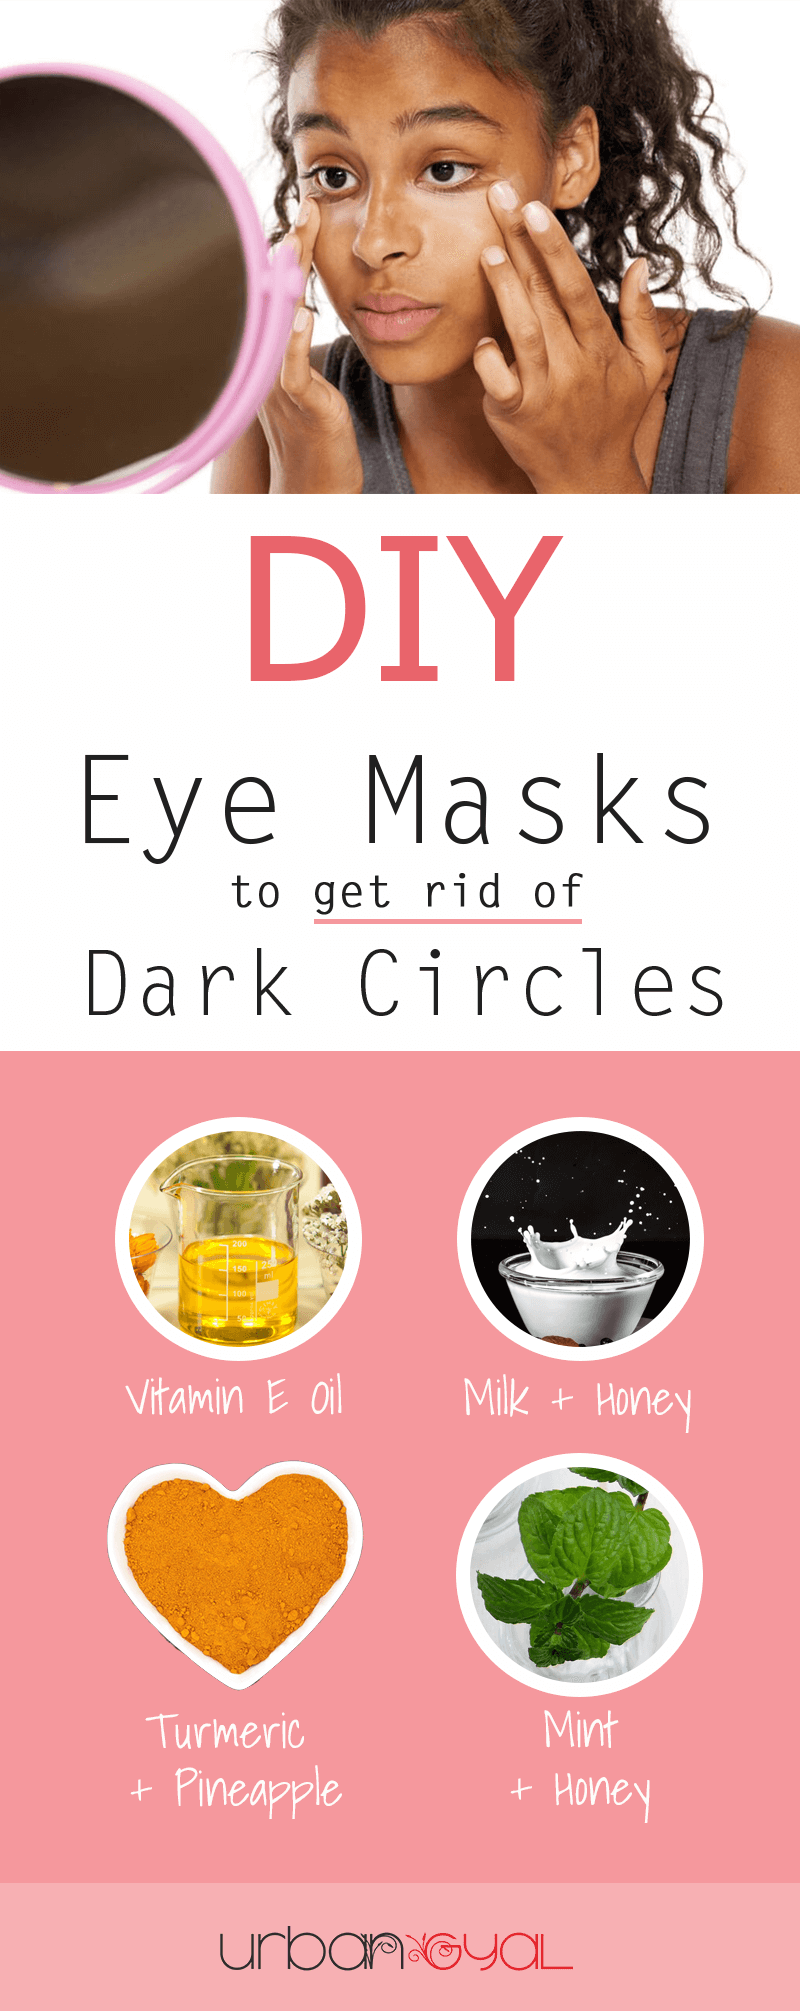 DIY Eye Masks for Dark Circles